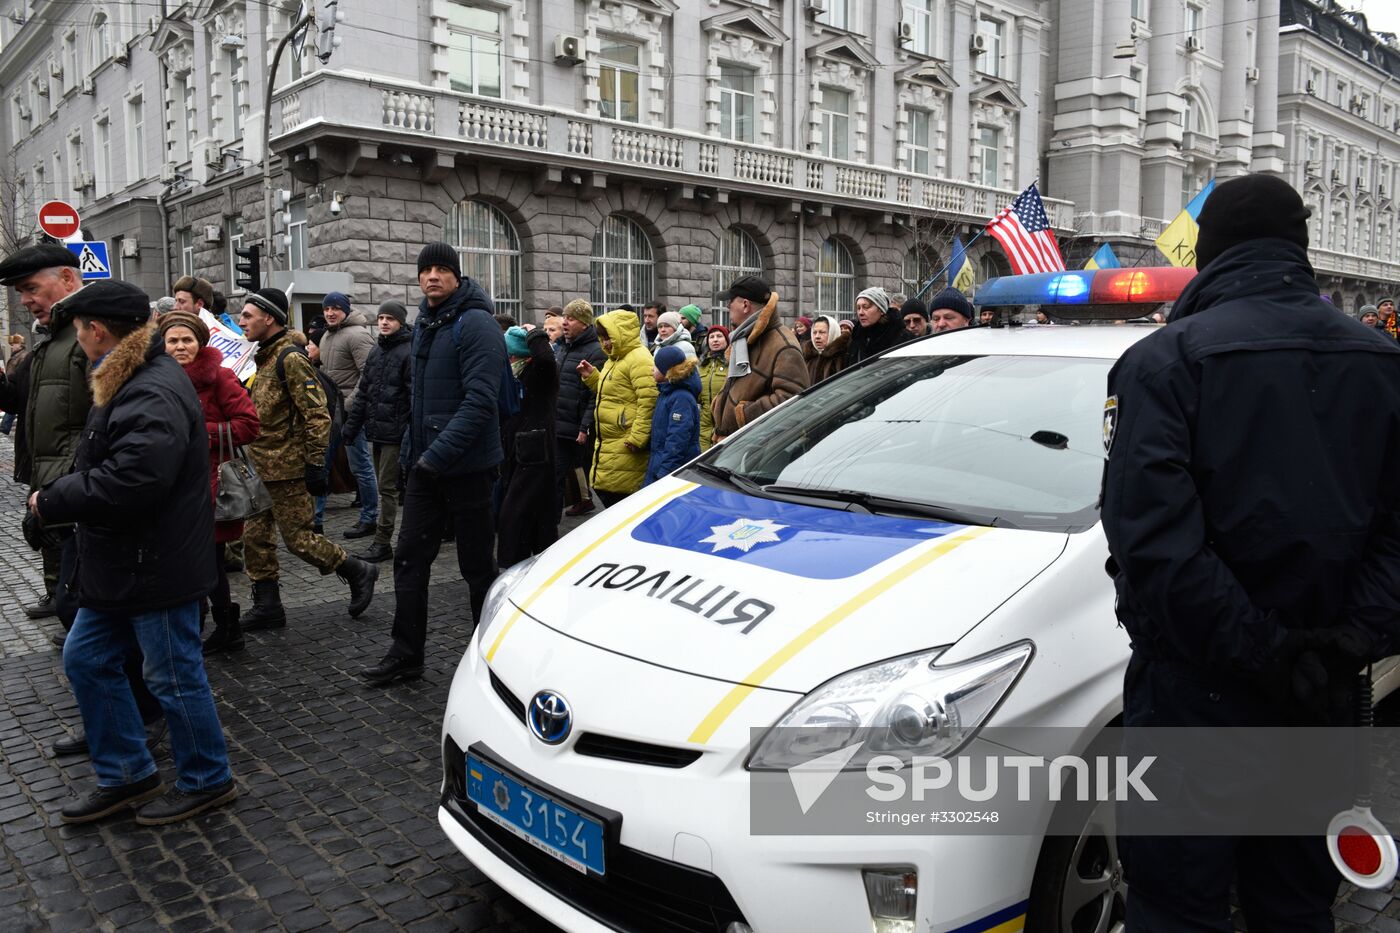 Saakashvili supporters in Kiev rally demanding Poroshenko's resignation